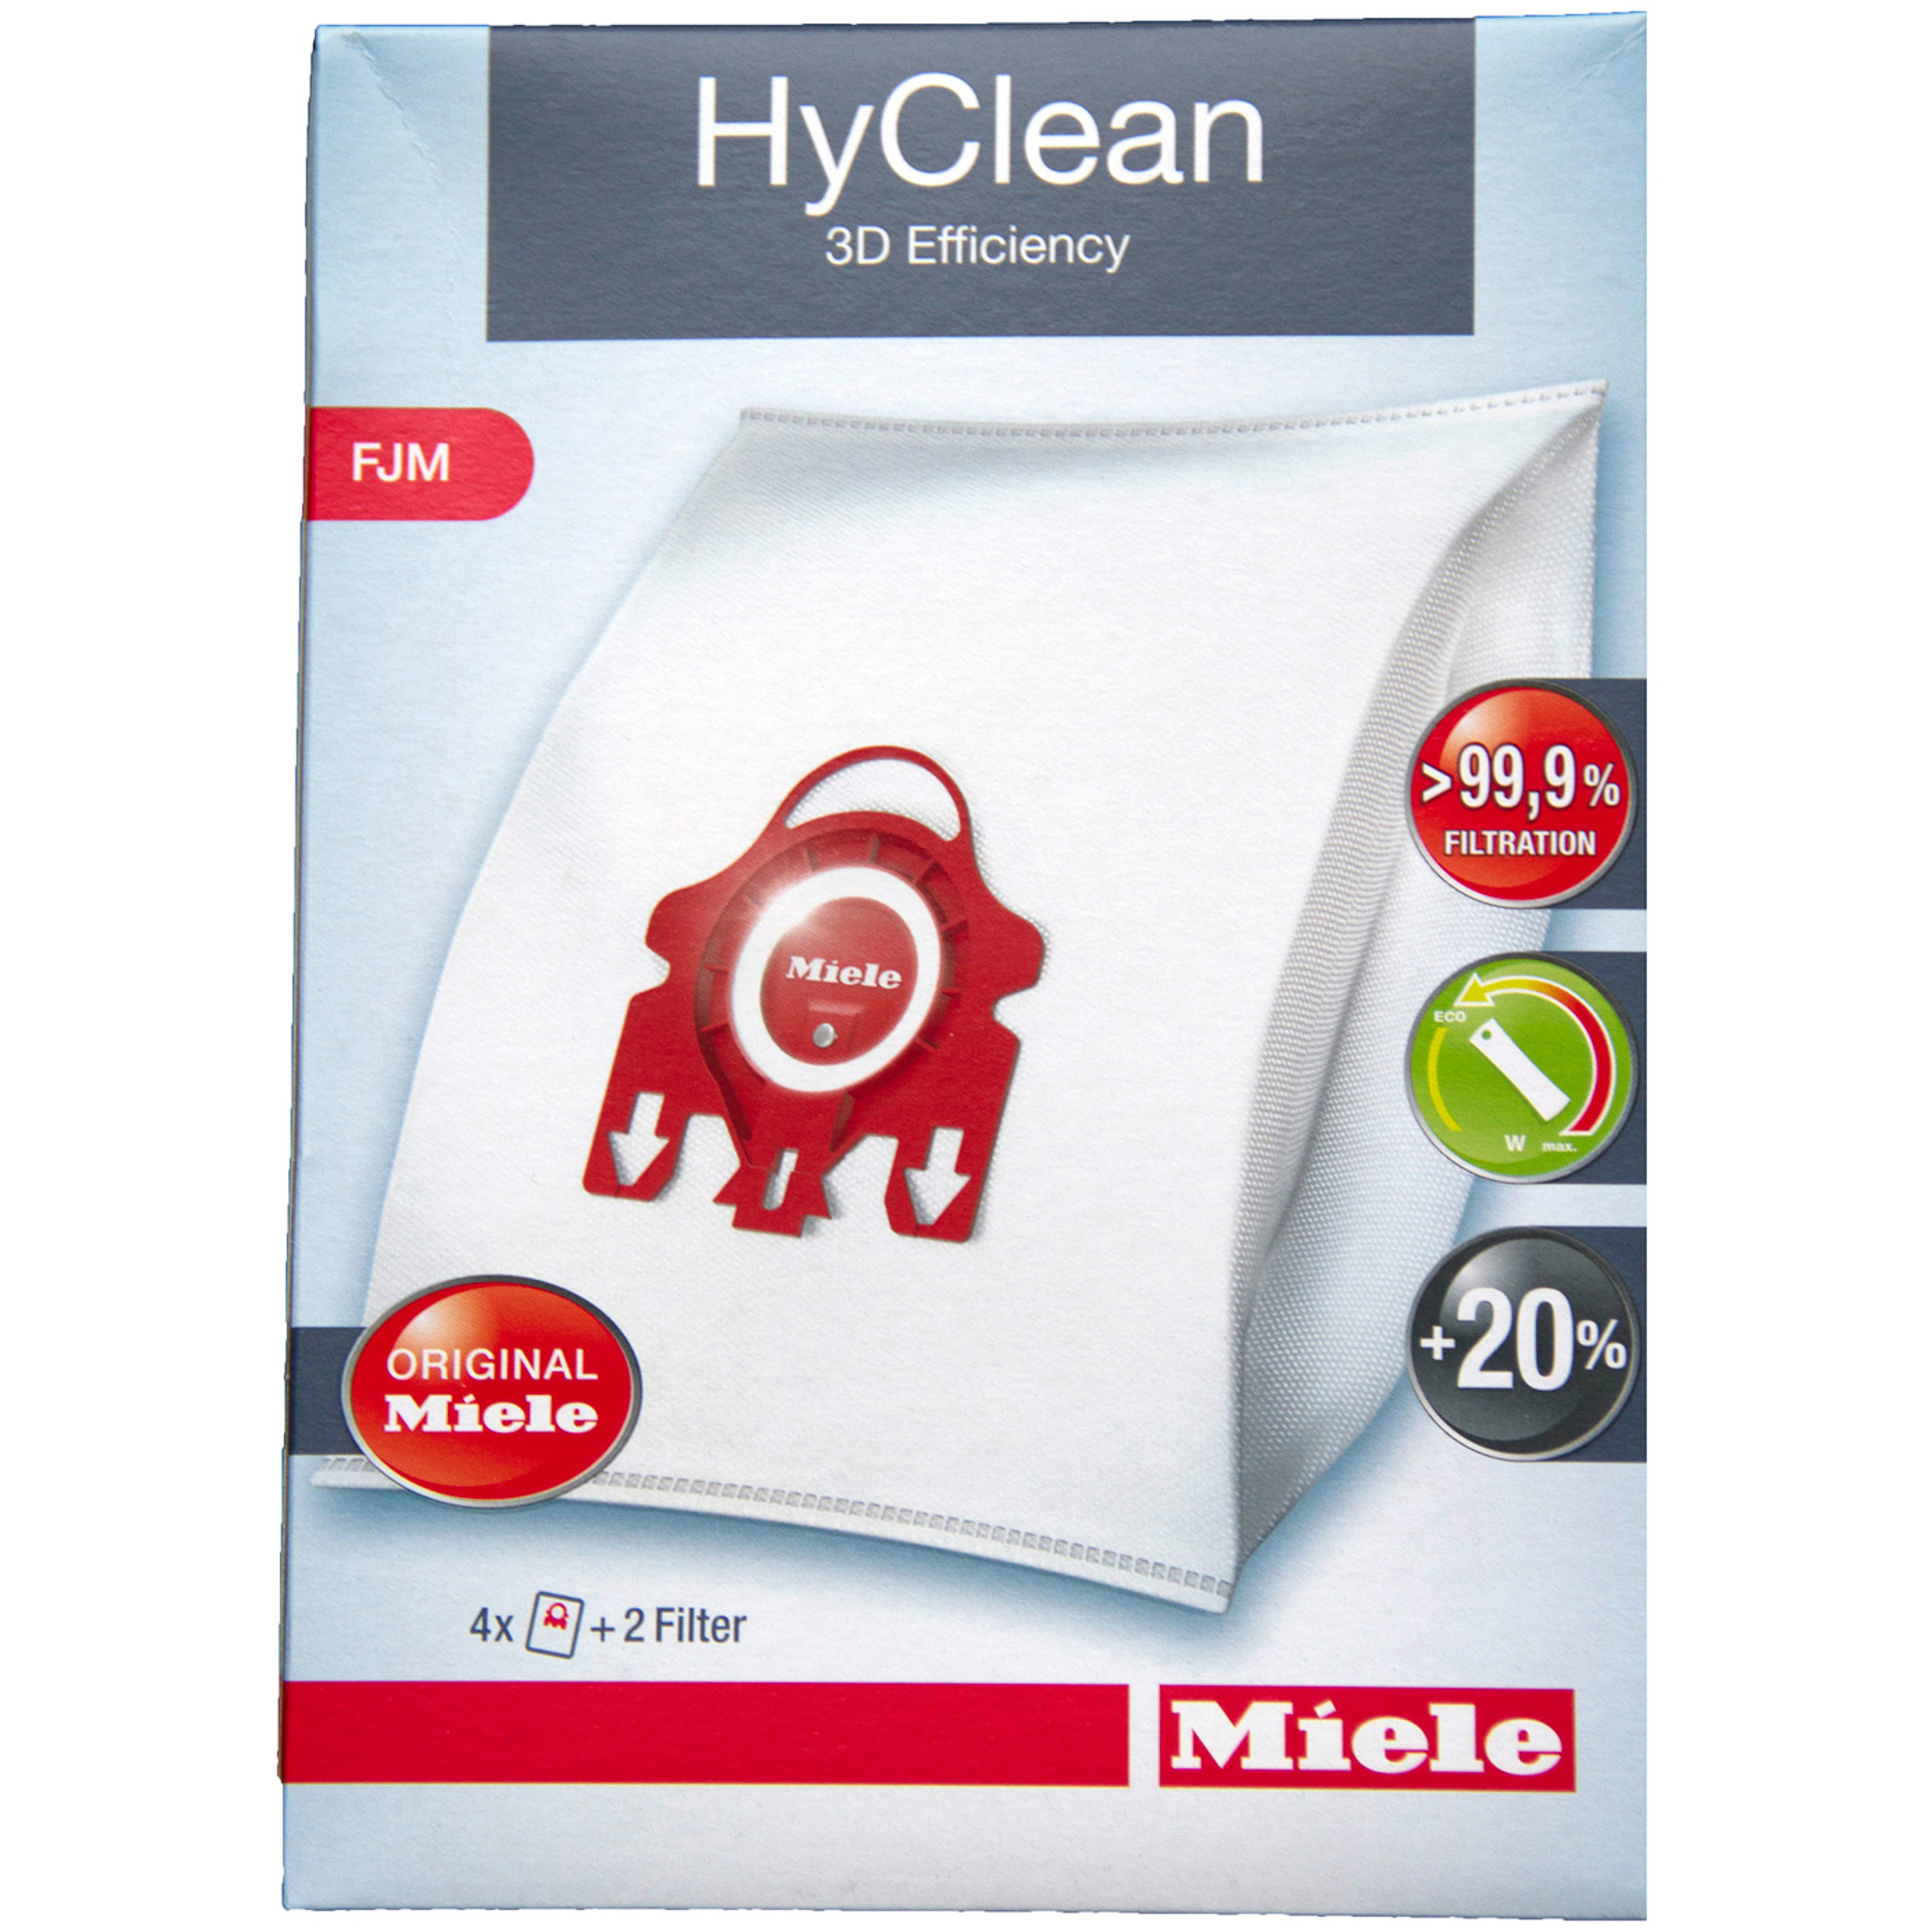 Пылесборник Miele FJM HyClean 3D Efficiency комплект мешков hyclean 3d fjm 5шт комплект для пылесоса miele 10632910 07805100 9153490